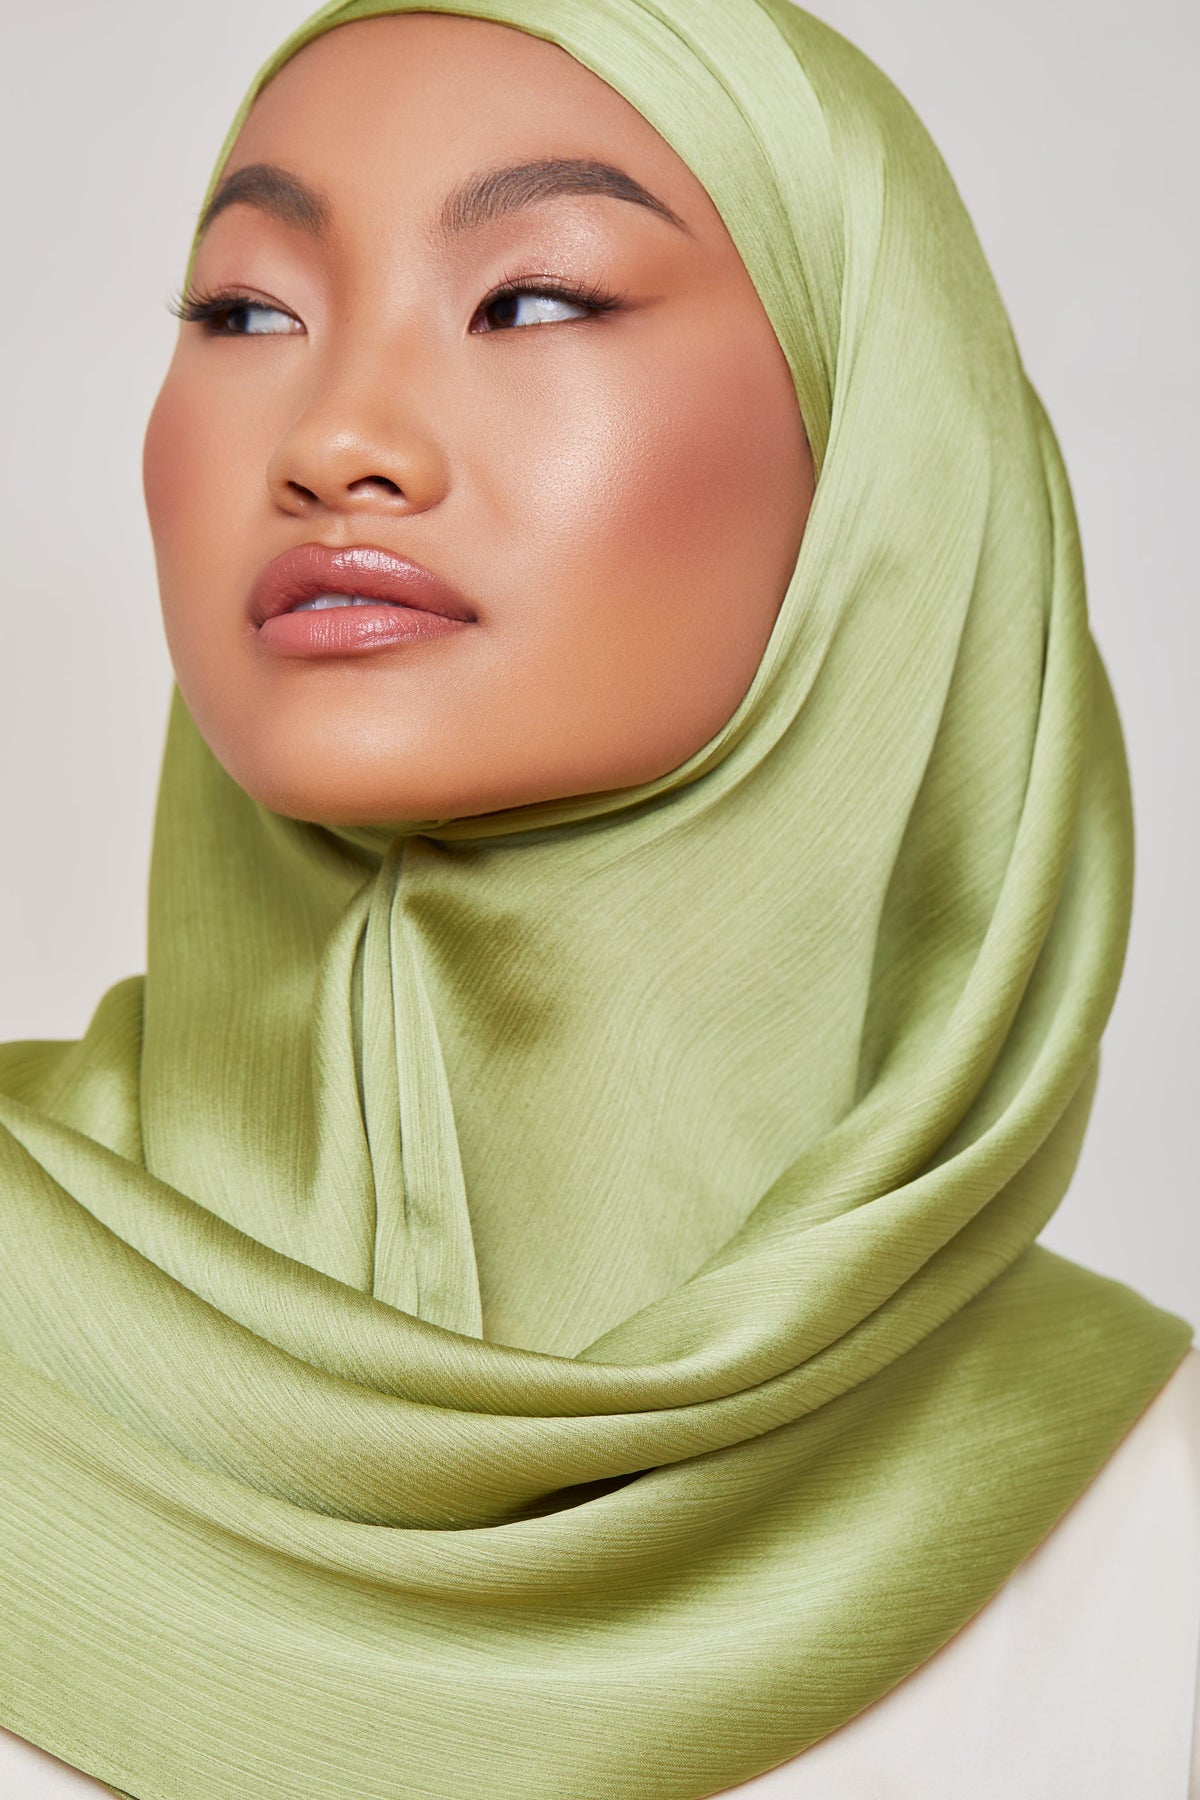 TEXTURE Satin Crepe Hijab - Algae Crepe Veiled Collection 